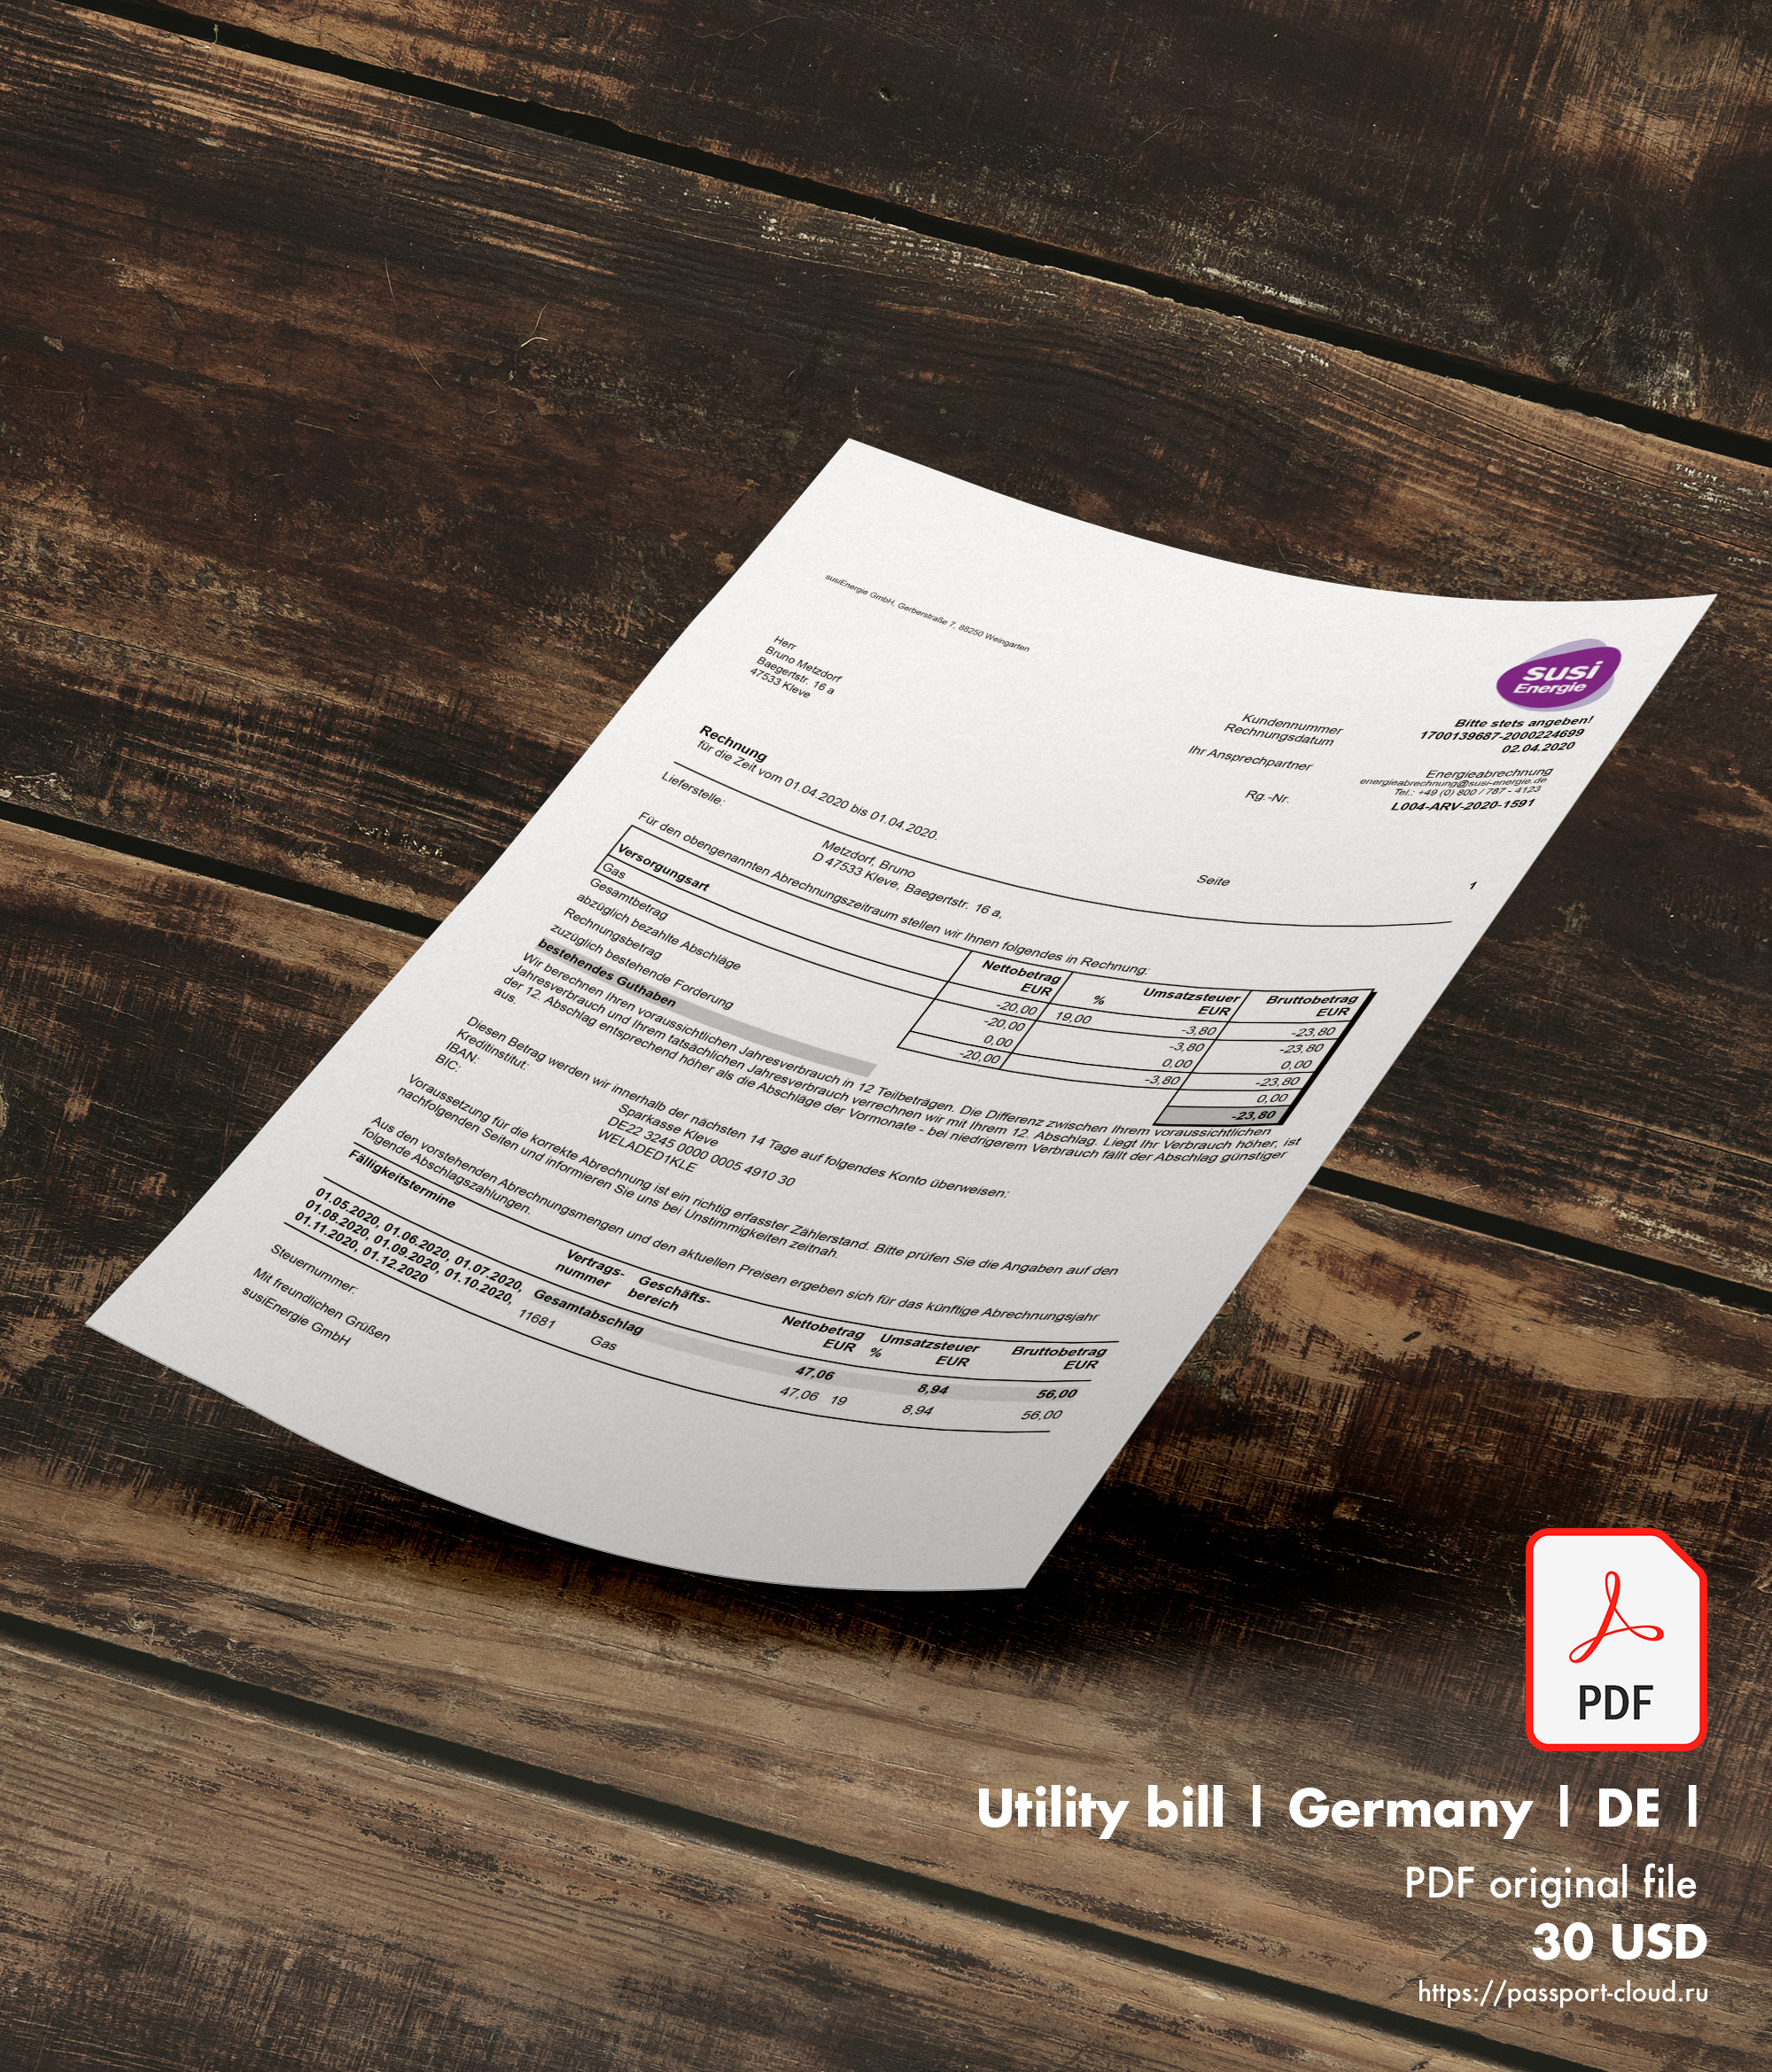 Utility bill | Germany 1